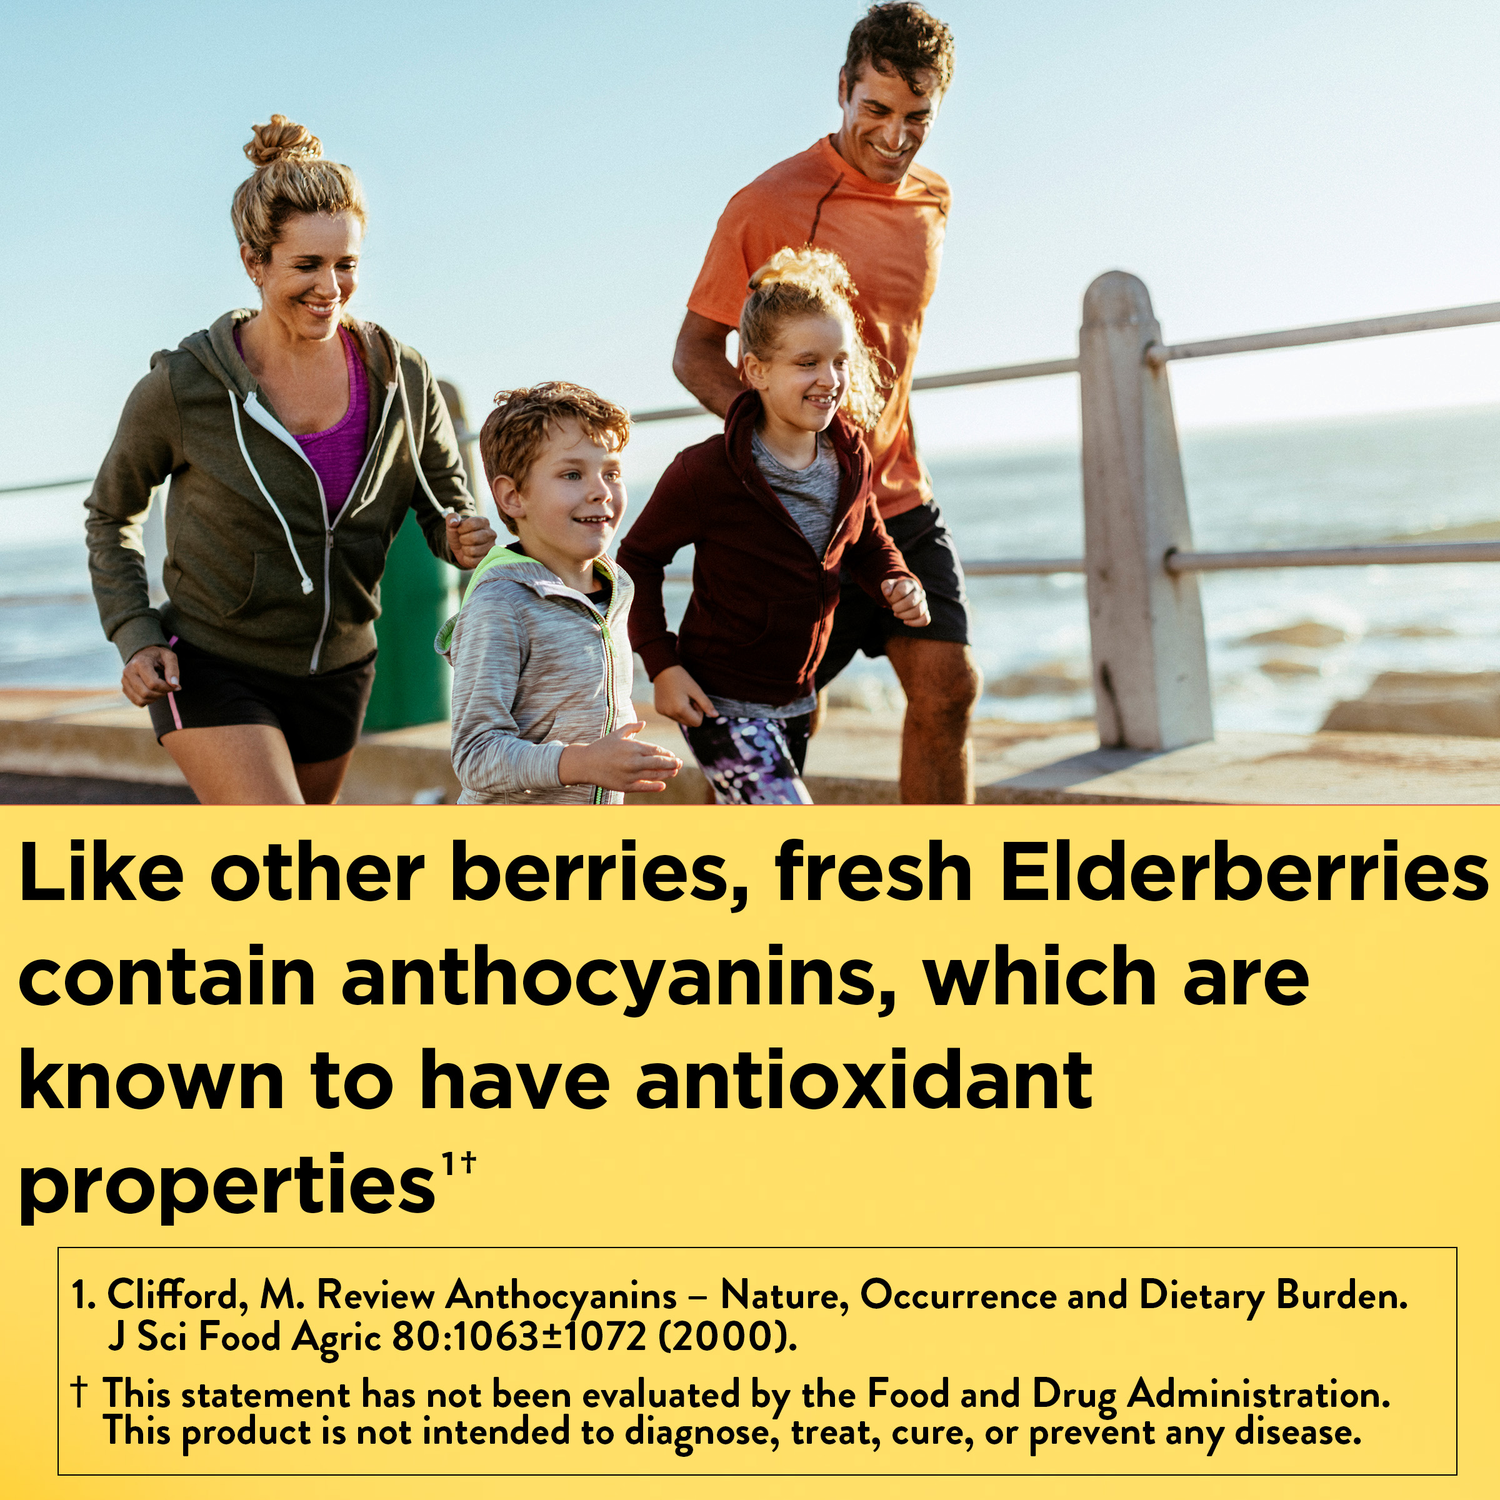 Elderberry Capsules with Vitamin C and Zinc | 